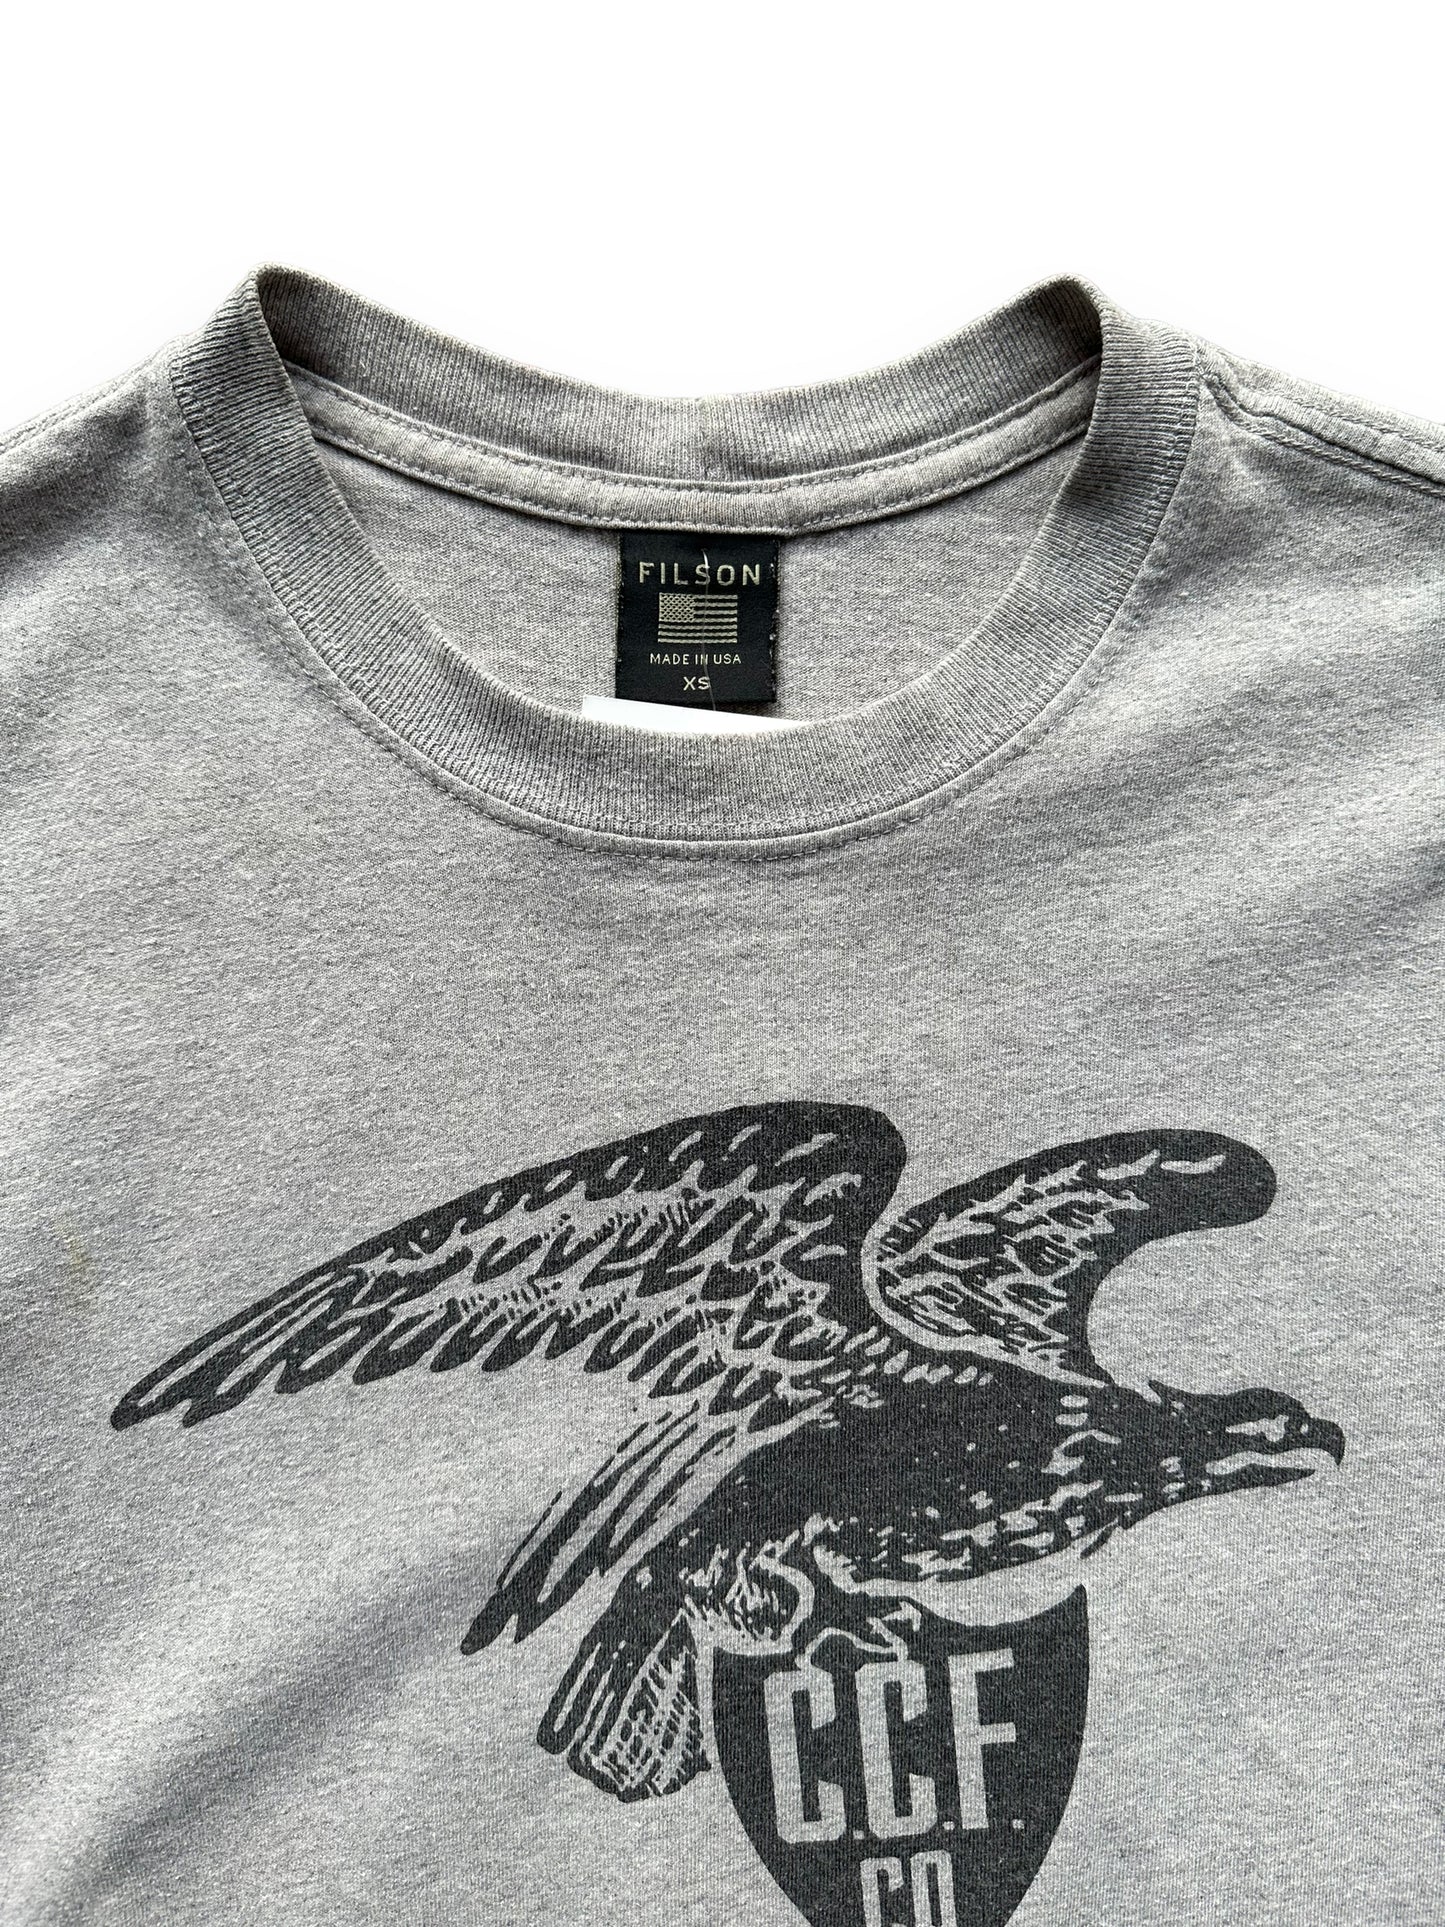 Tag View of Grey Filson Eagle Graphic Tee SZ XS |  Barn Owl Vintage Goods | Vintage Filson Workwear Seattle